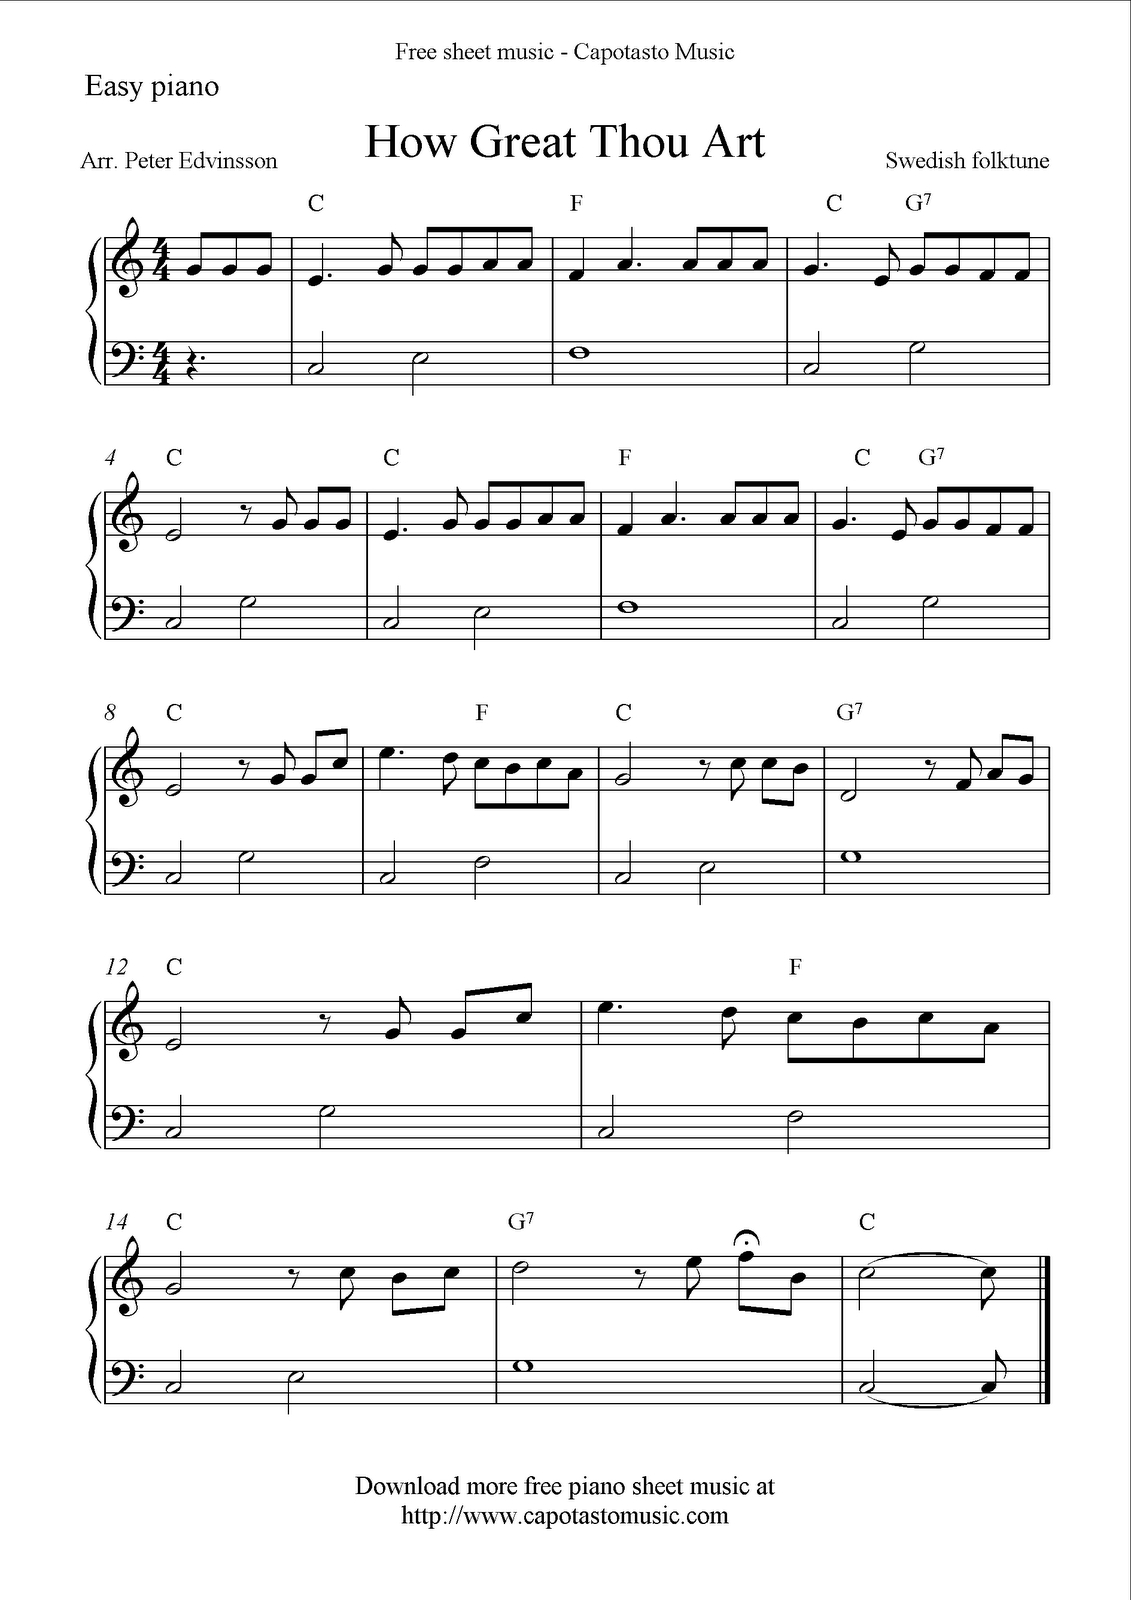 Beginners Piano Sheet Music | Free Sheet Music Scores: Free Easy - Free Printable Sheet Music